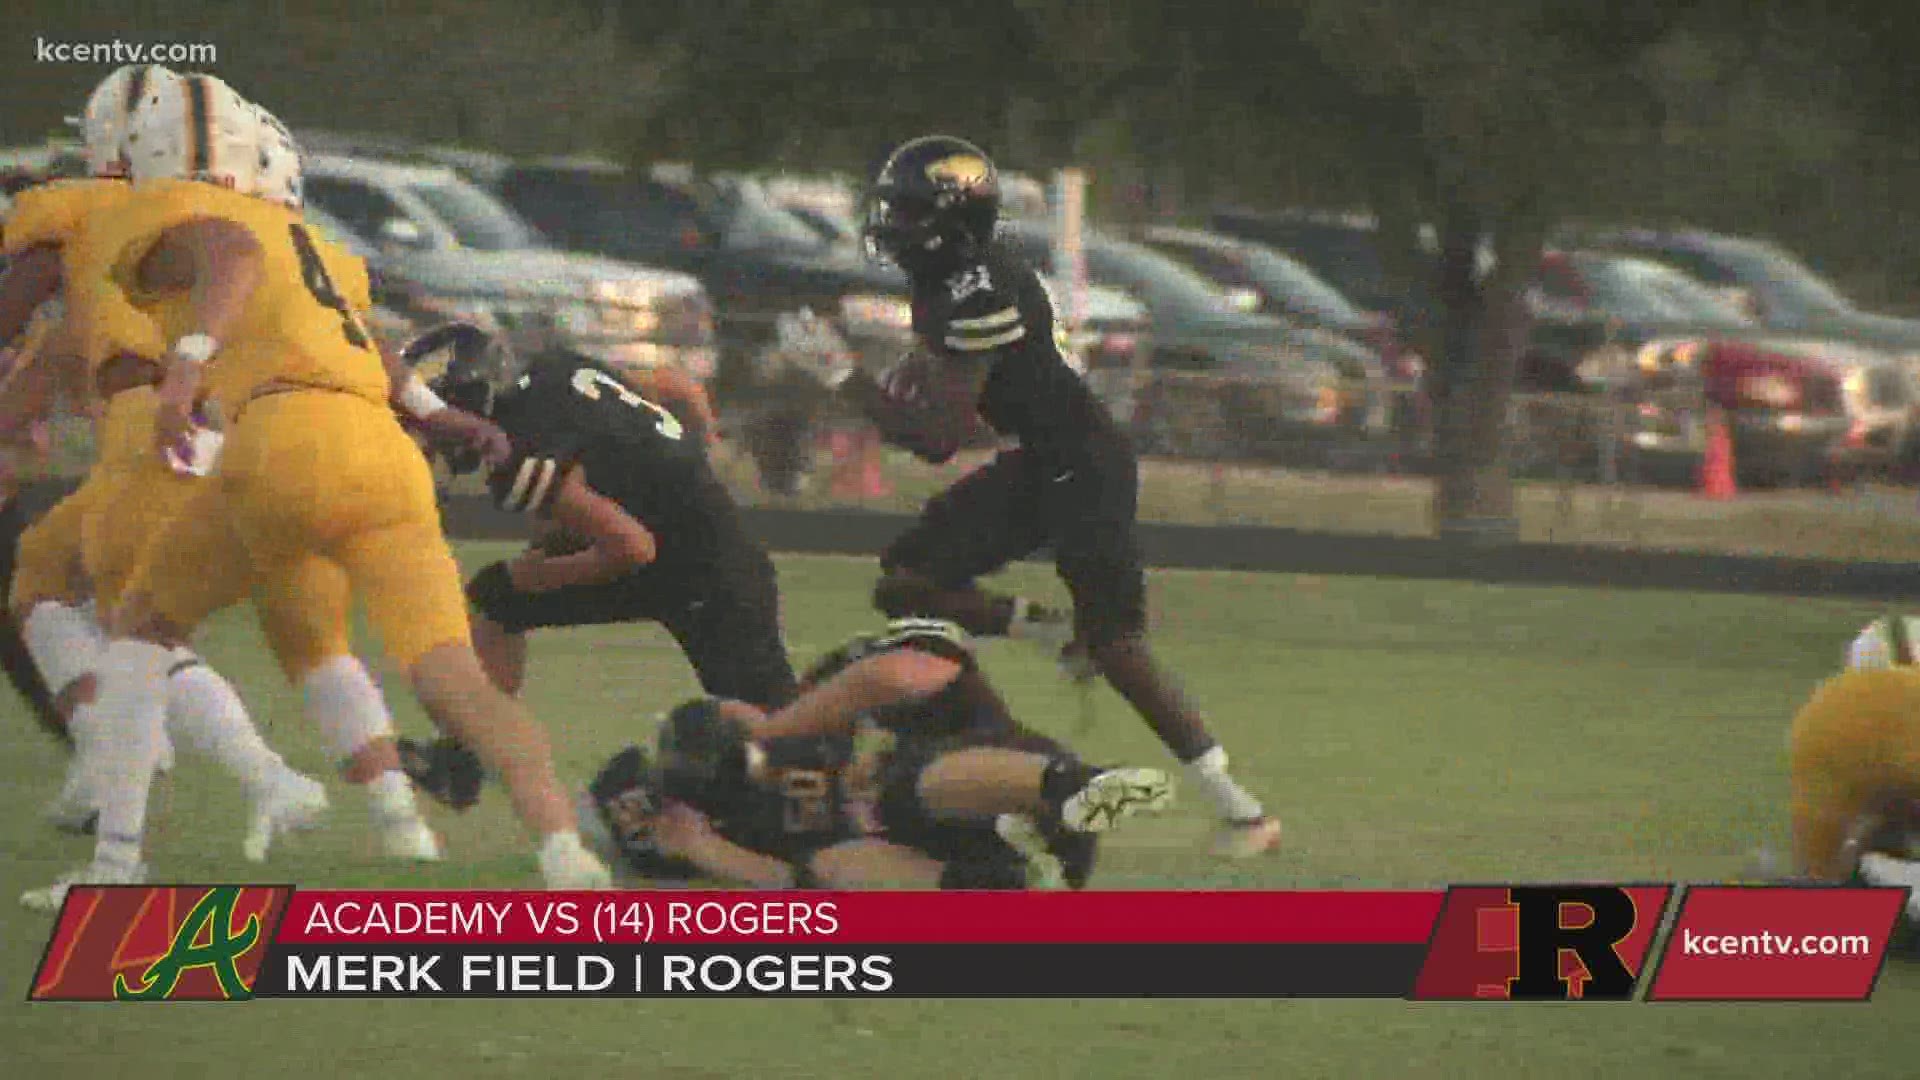 Academy knocks off Rogers 20-15